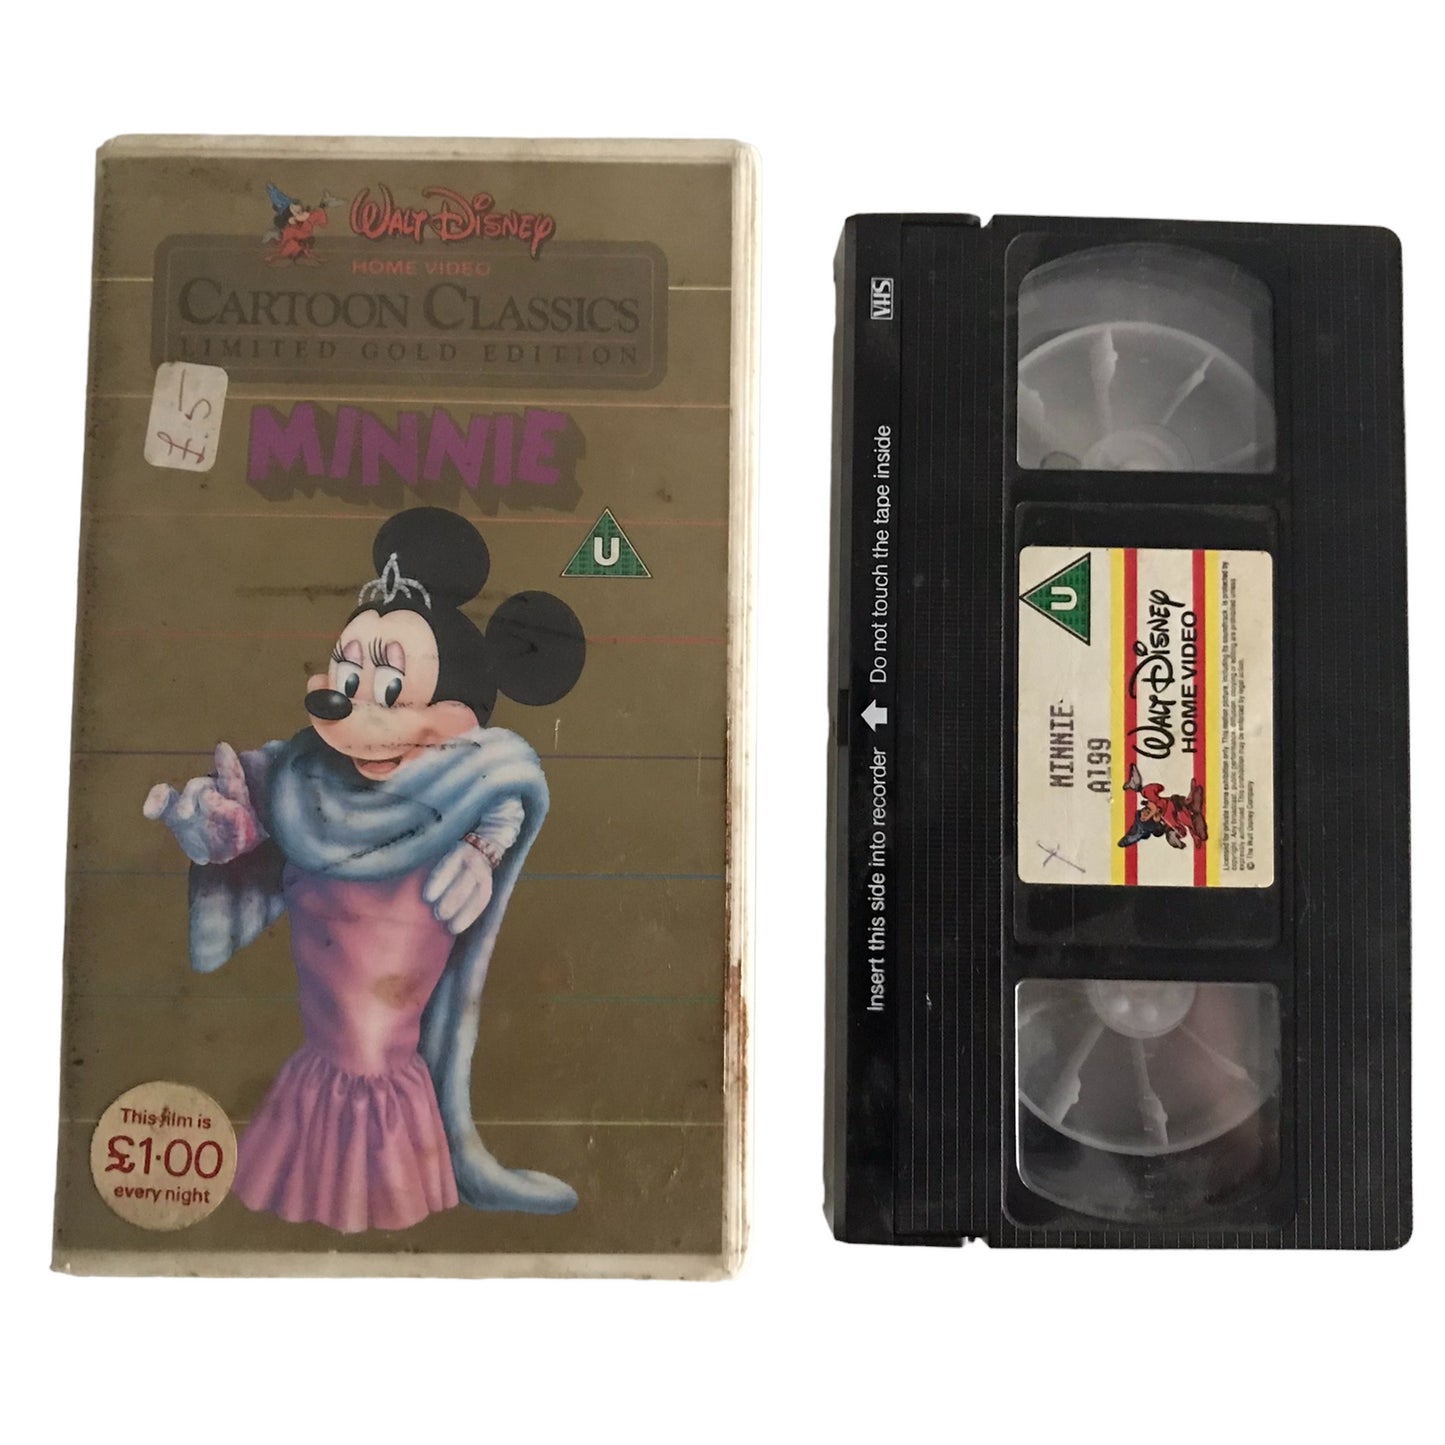 Cartoon Classics Limited Gold Edition - Minnie - Walt Disney Home Video - A199 - Kids - Pal - VHS-